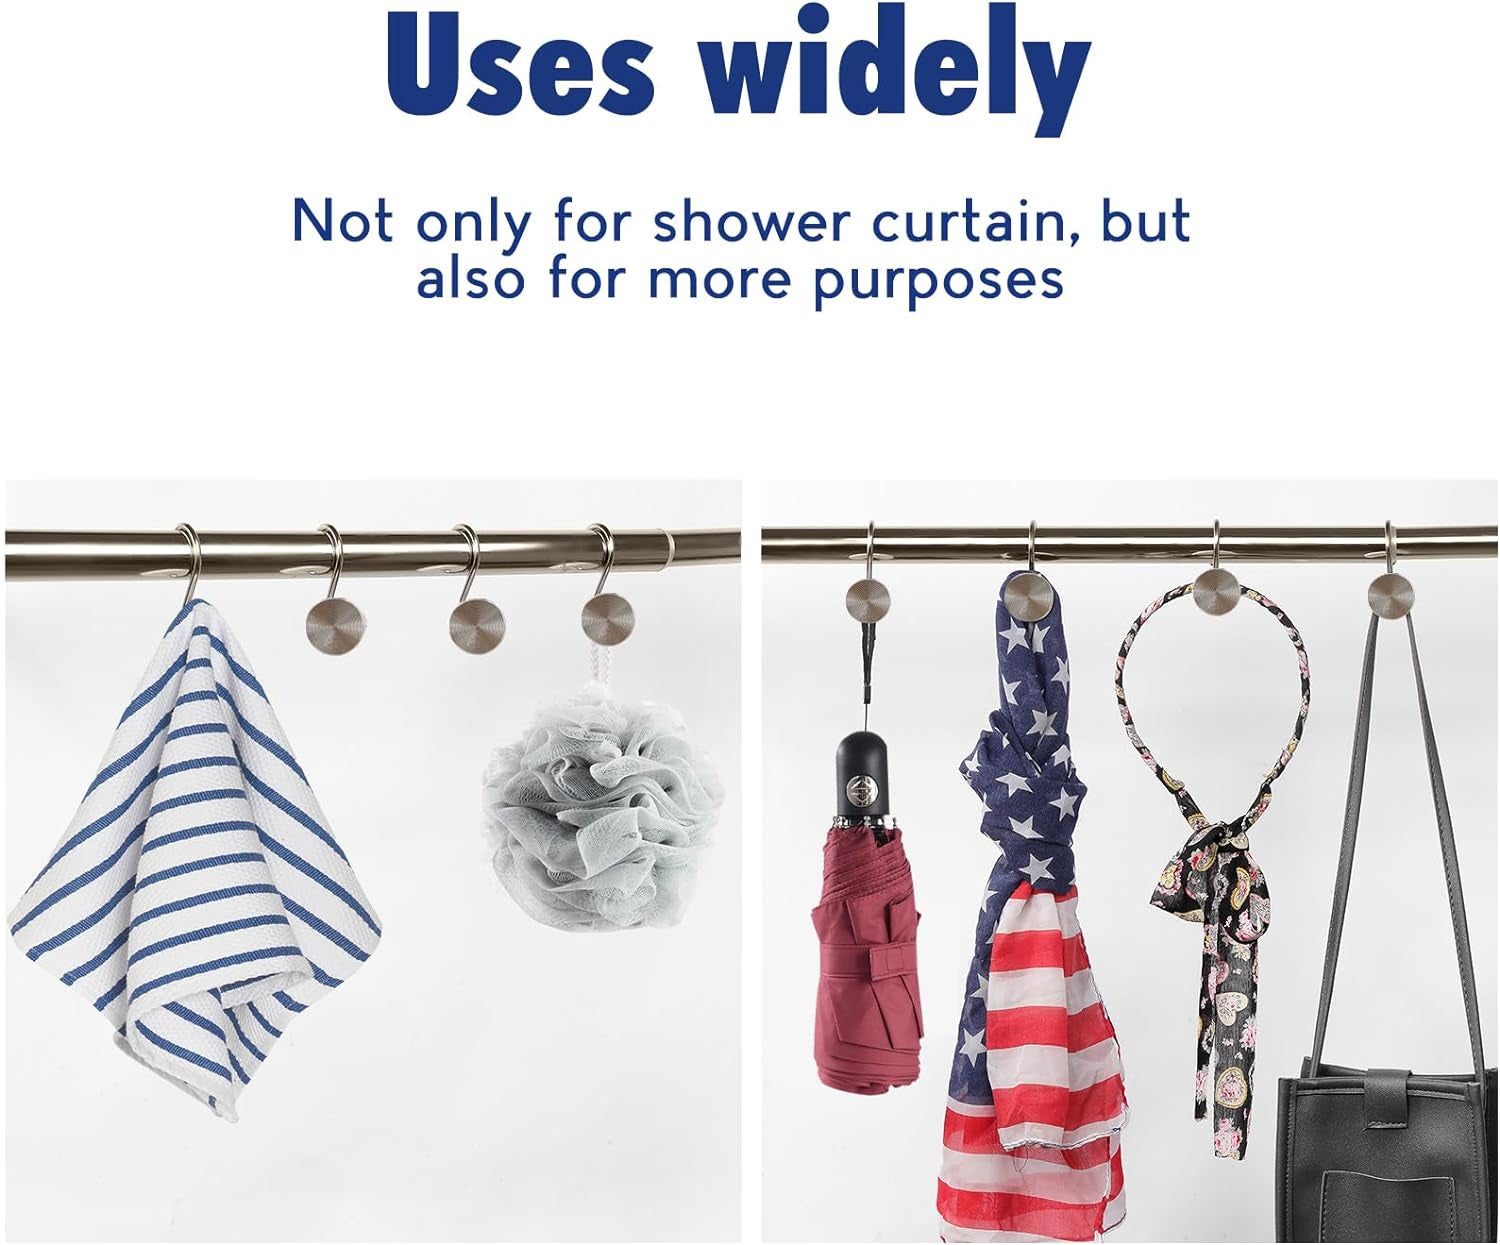 Nickel Shower Curtain Hooks Rings:Rust Proof Shower Curtain Hooks,Metal Shower Hooks for Shower Curtains,Heavy Duty Shower Curtain Rings for Bathroom